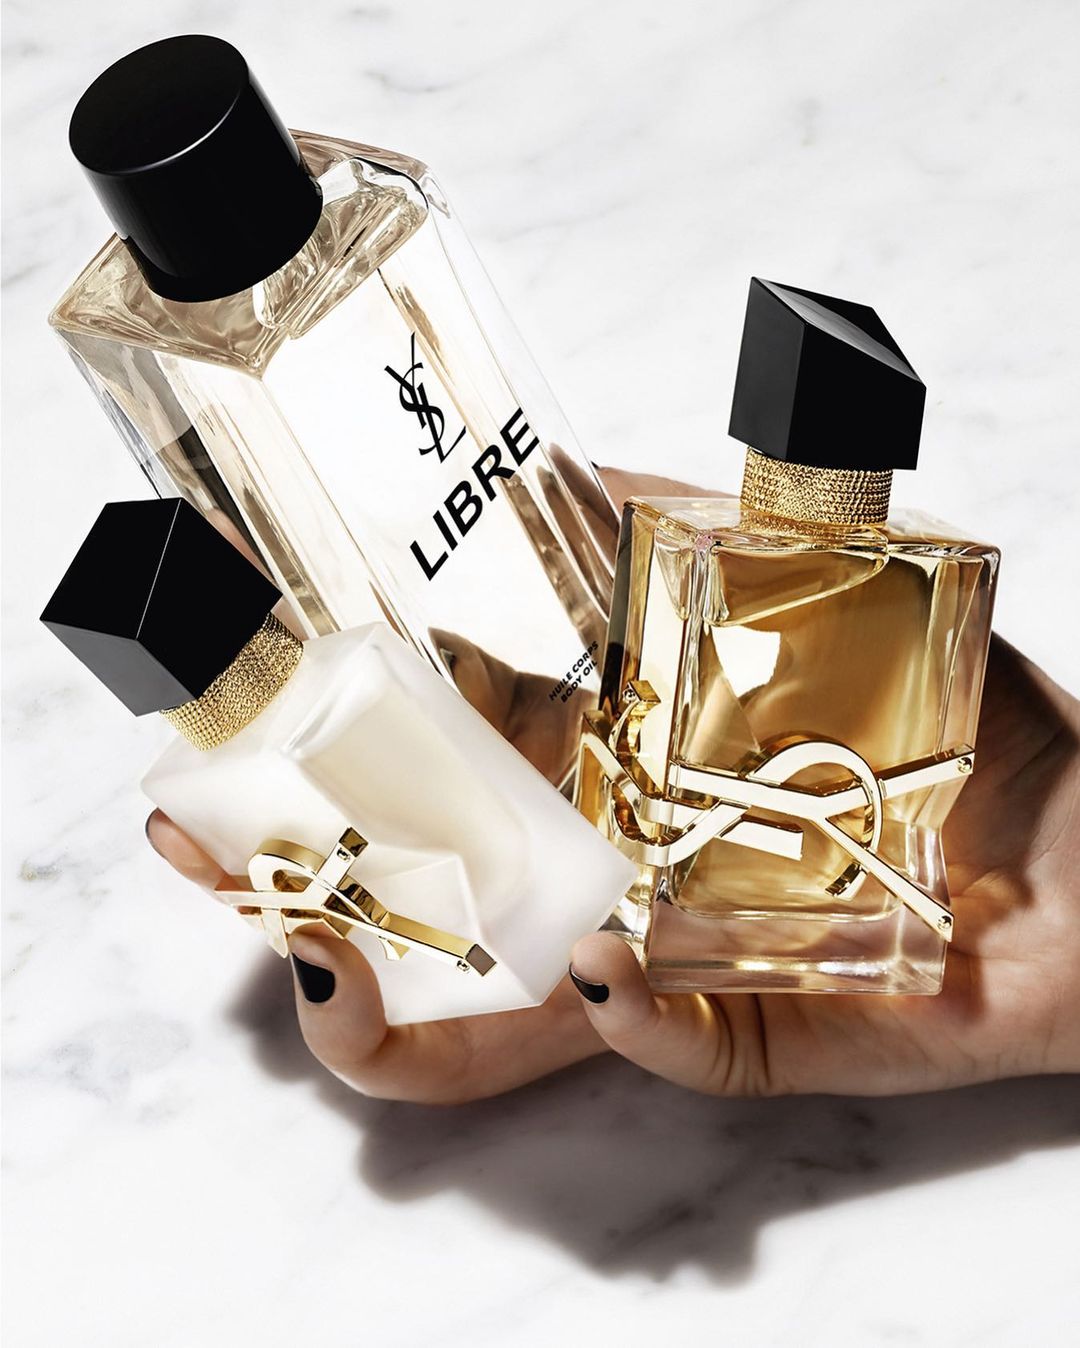 Three golden perfume bottles in someones hand.